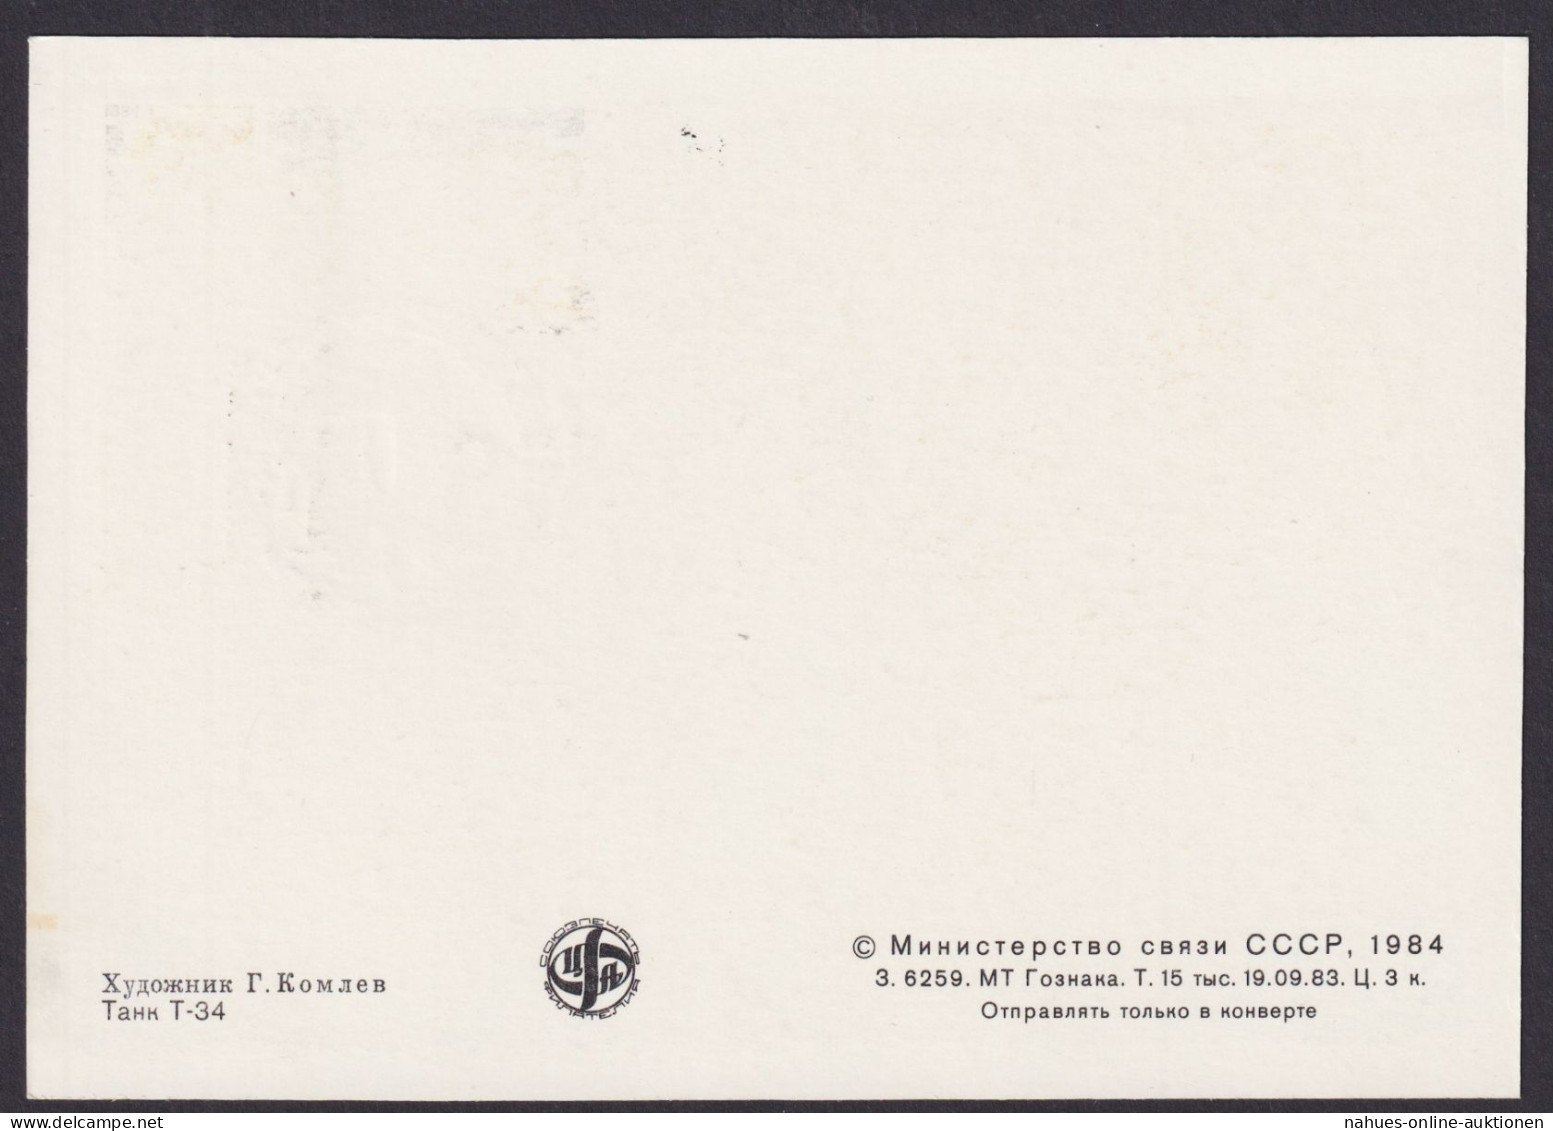 Sowjetunion Militaria Panzer Maximumkarte Mockba Moskau Russland Russische Armee - Lettres & Documents